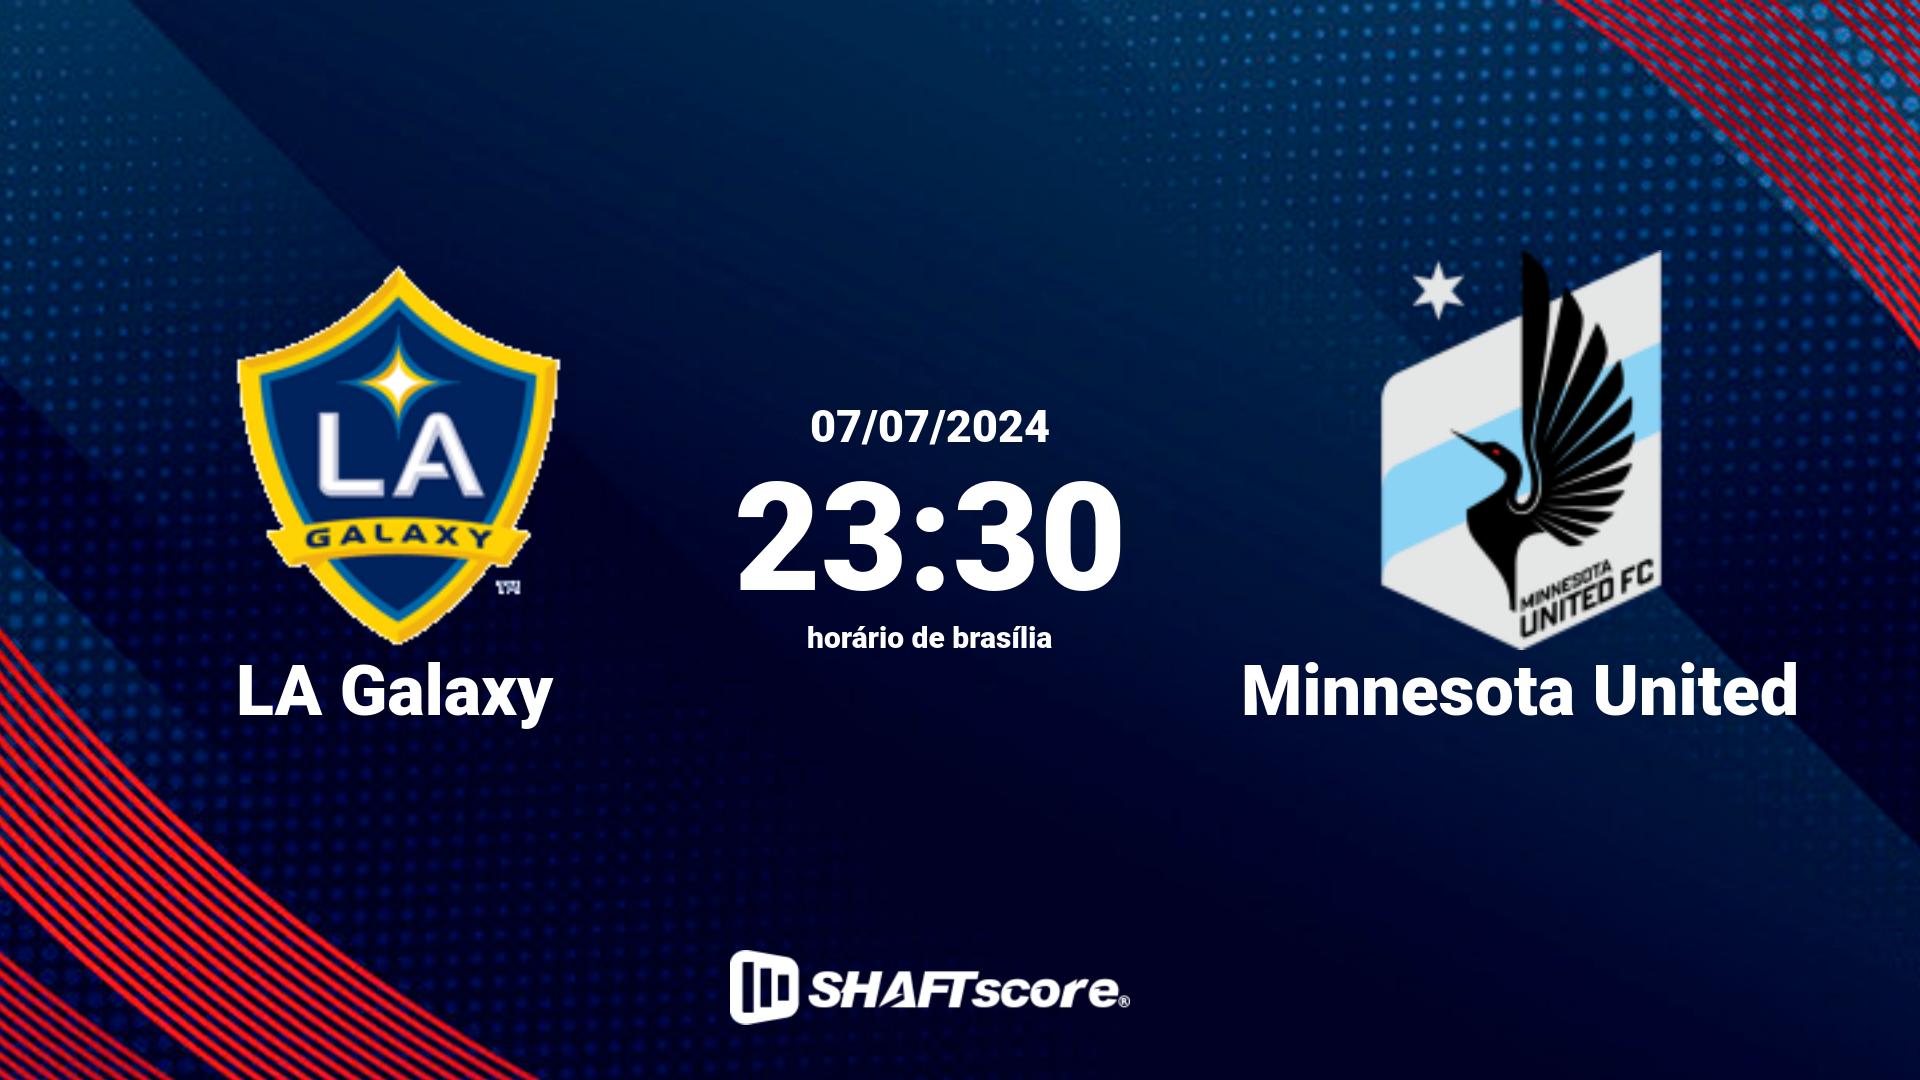 Estatísticas do jogo LA Galaxy vs Minnesota United 07.07 23:30